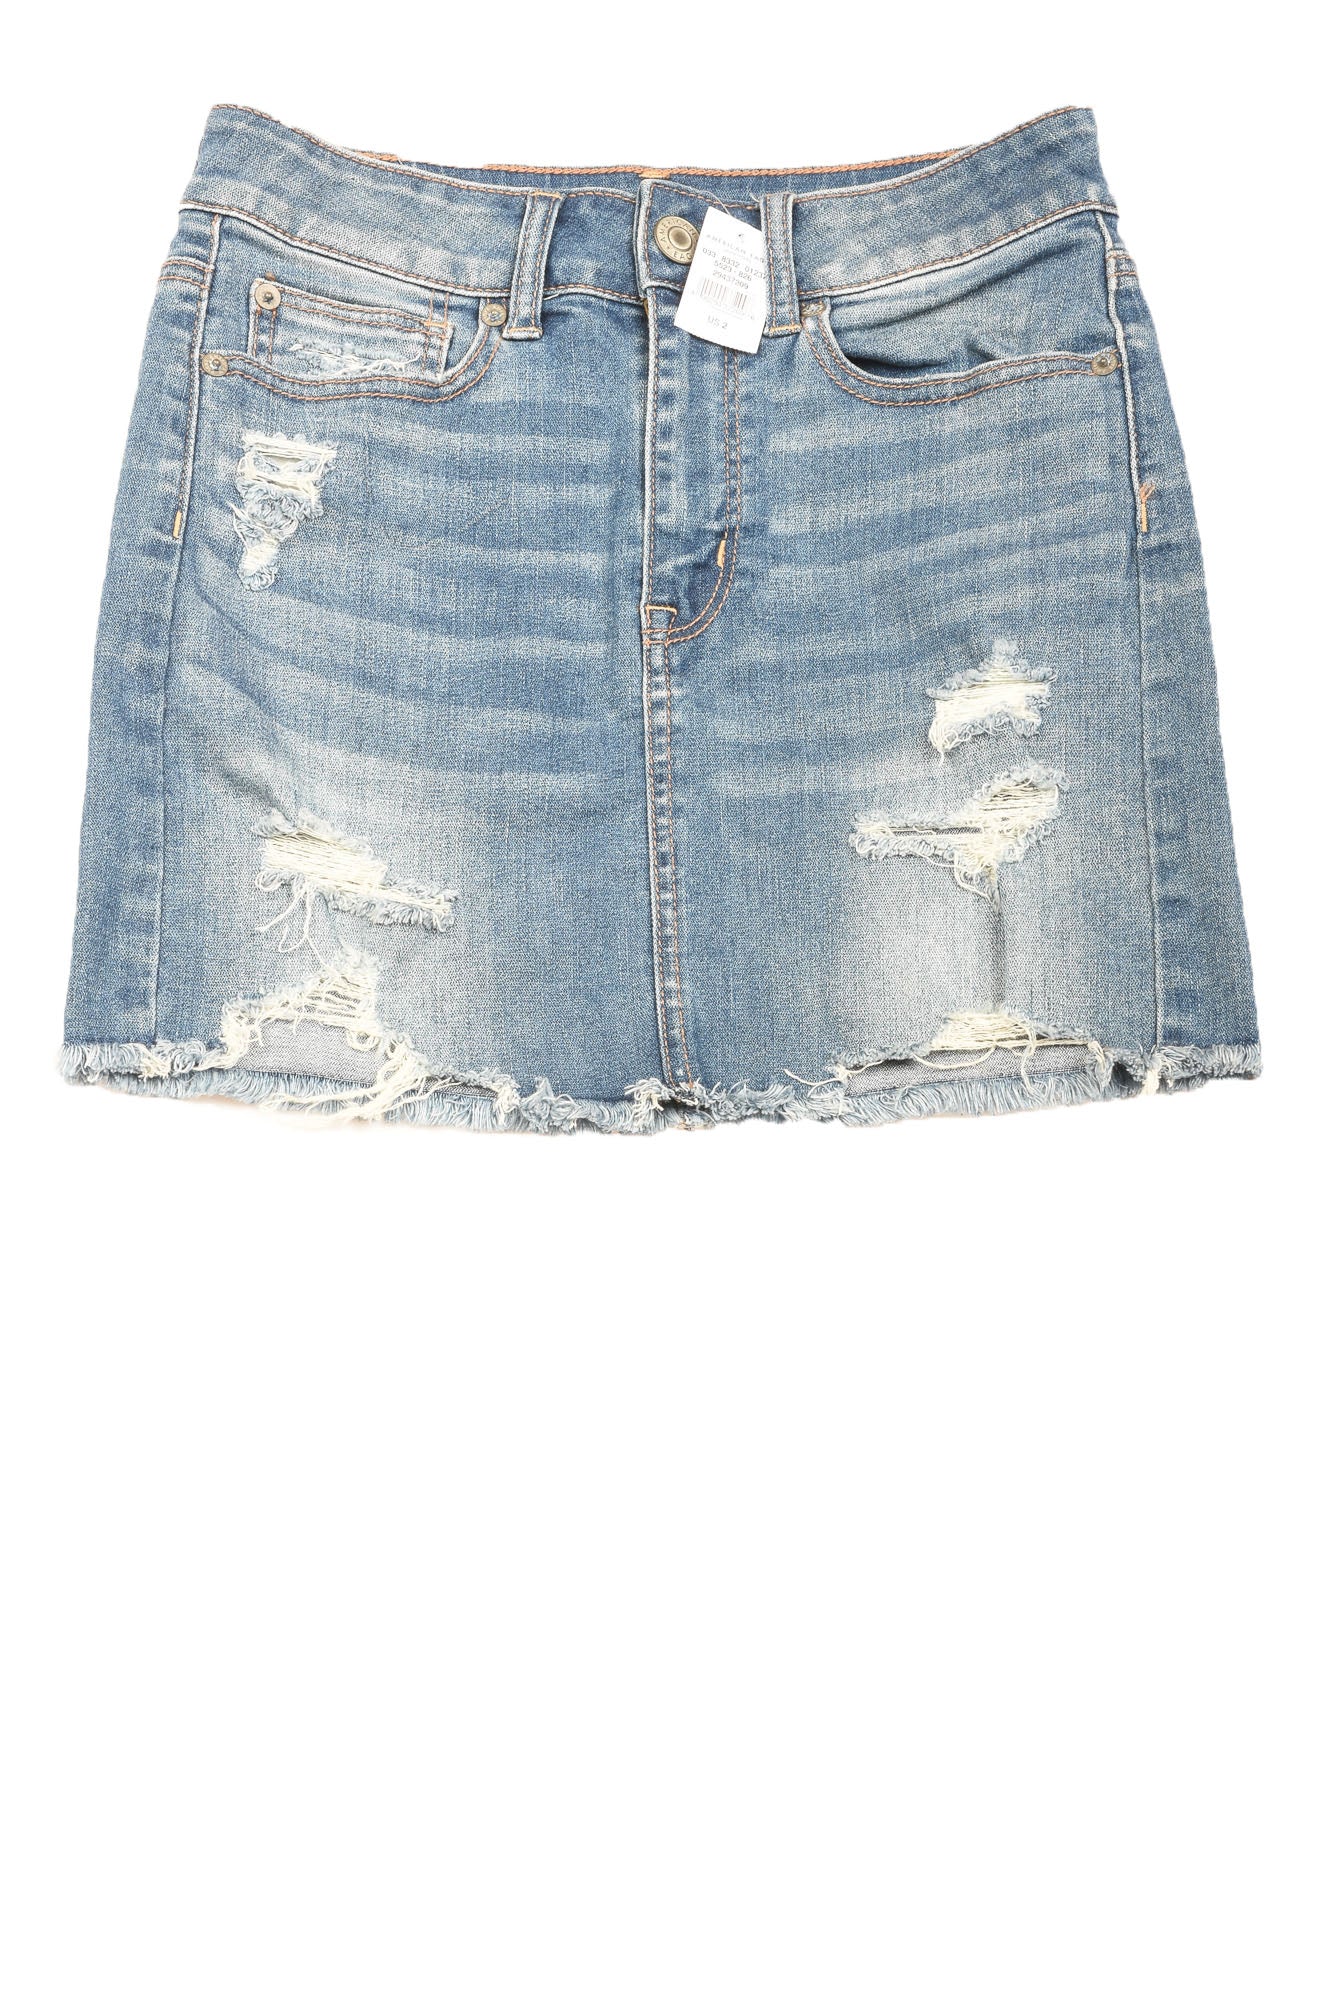 Shorts & Skirts, American Eagle Blue Denim Shorts